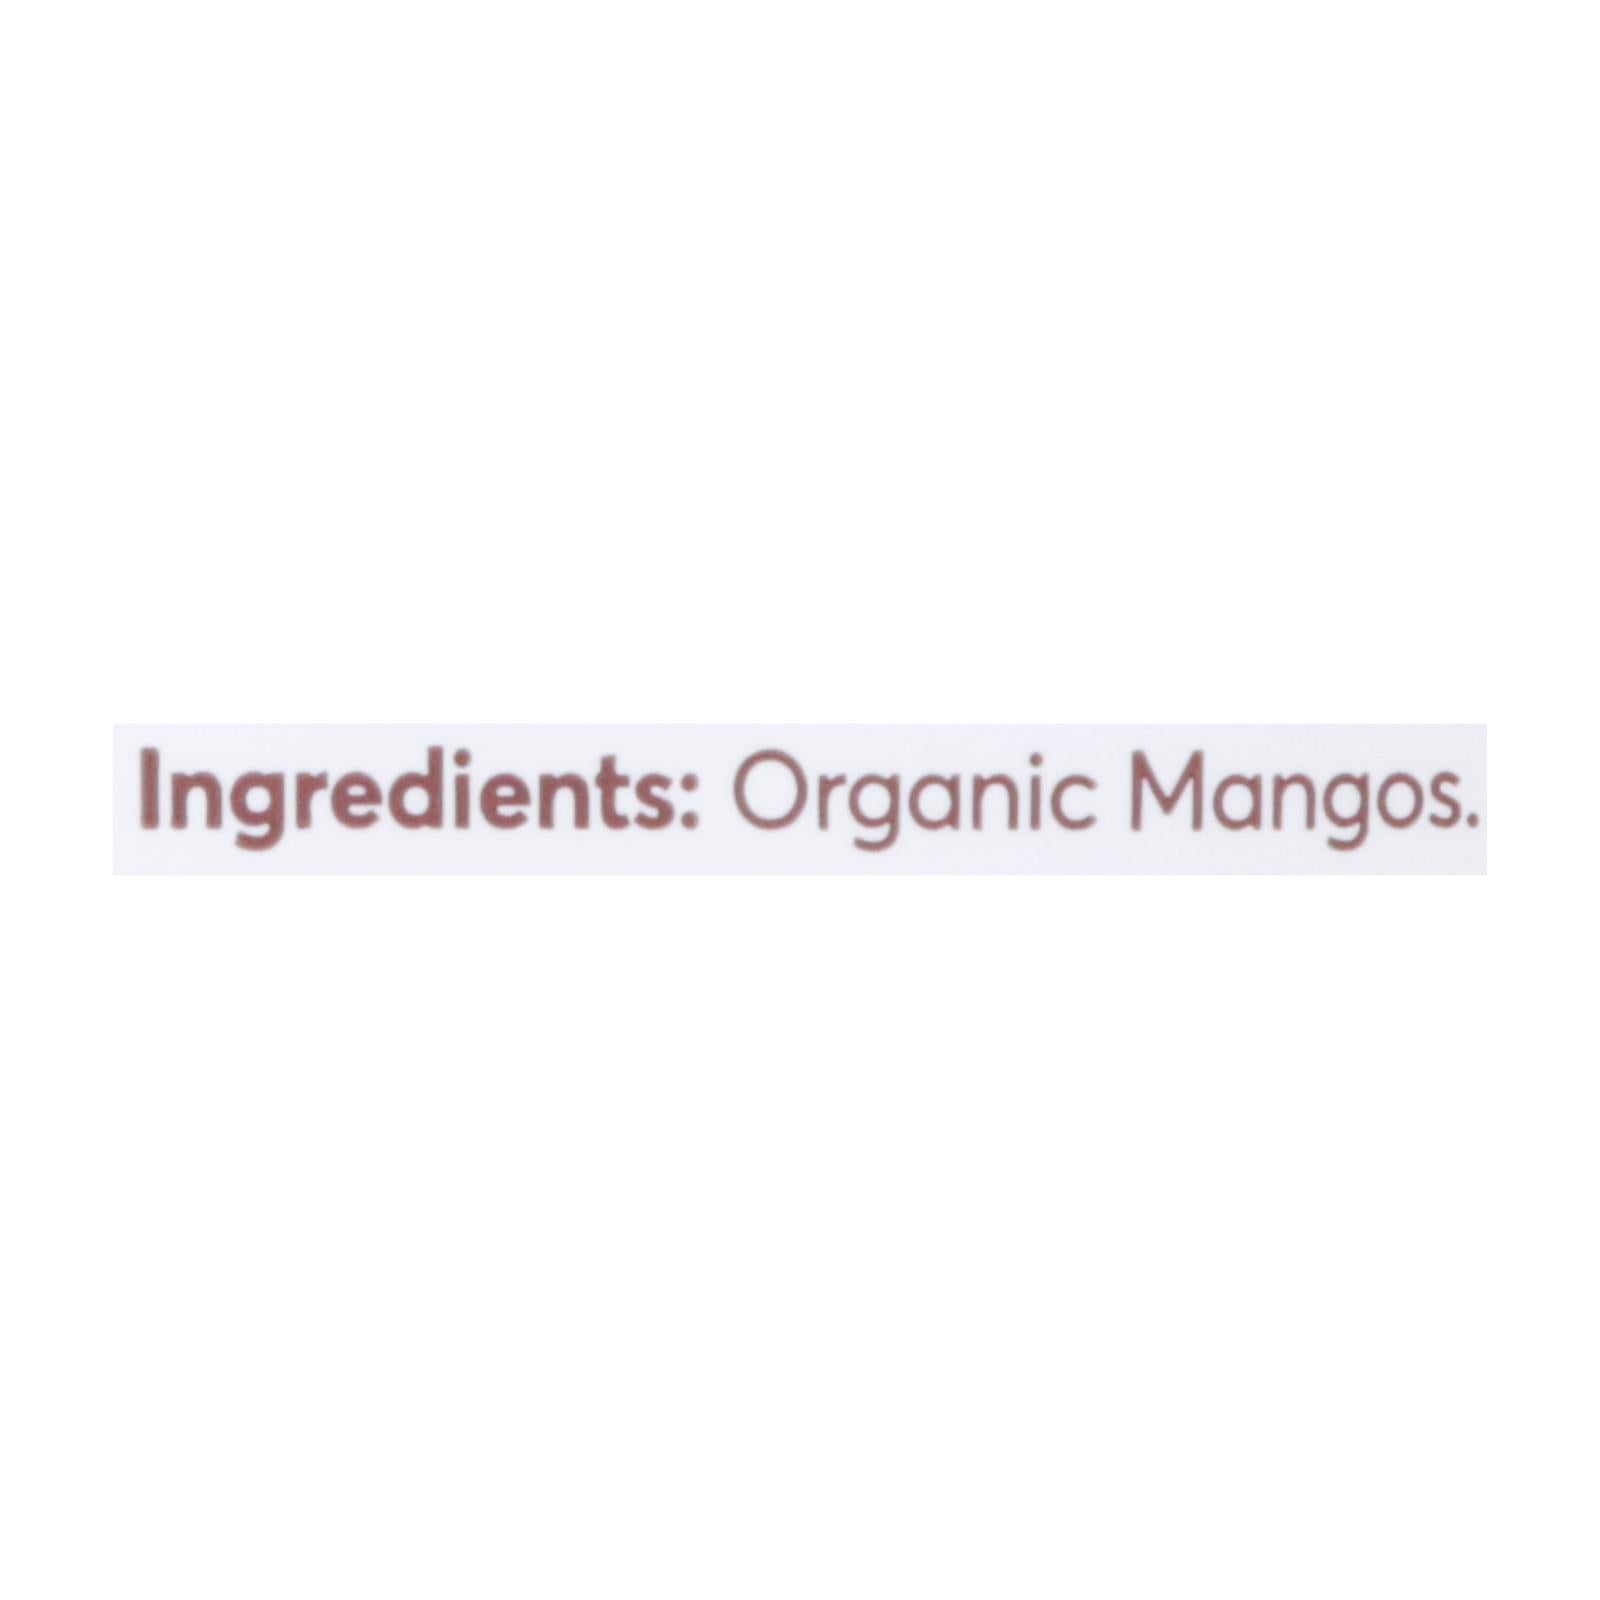 Natierra Freeze Dried - Mangos - Case Of 12 - 1.5 Oz.